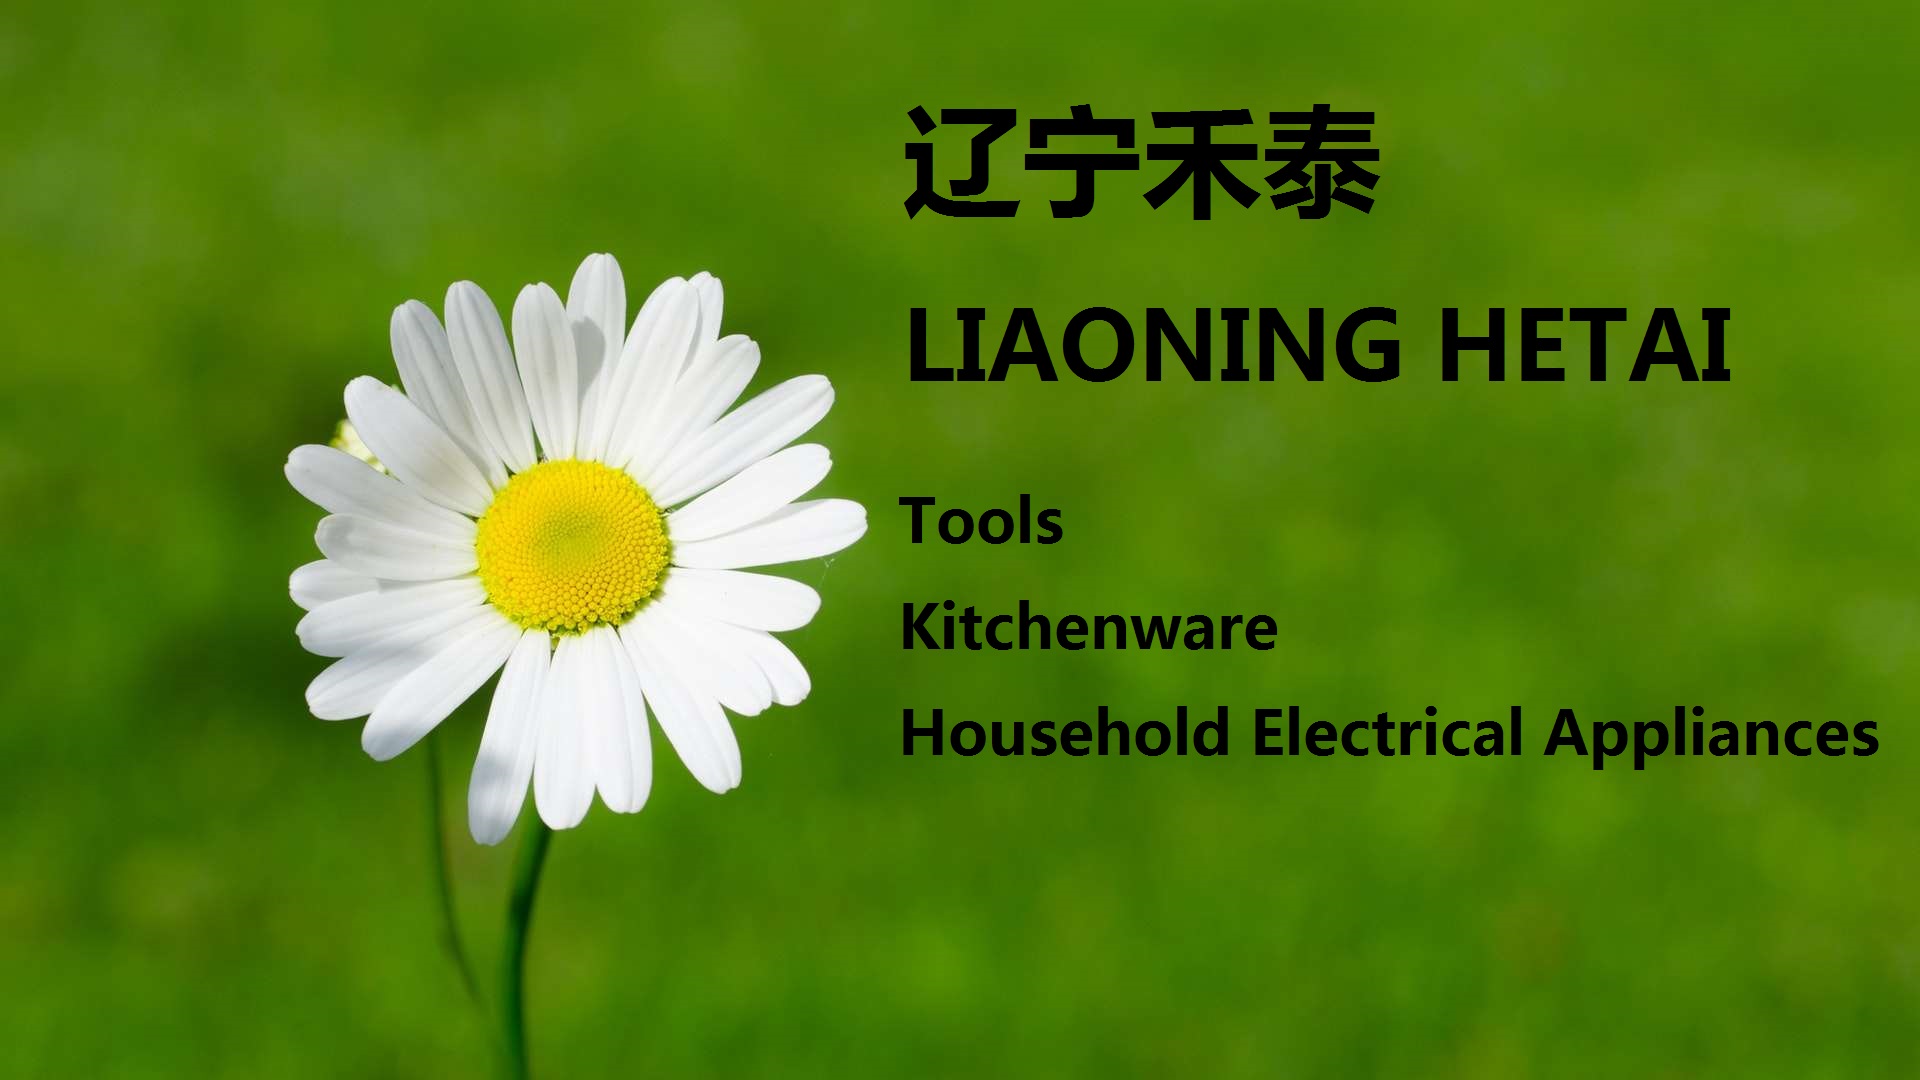 Liaoning hetai Environmental service co.,ltd.